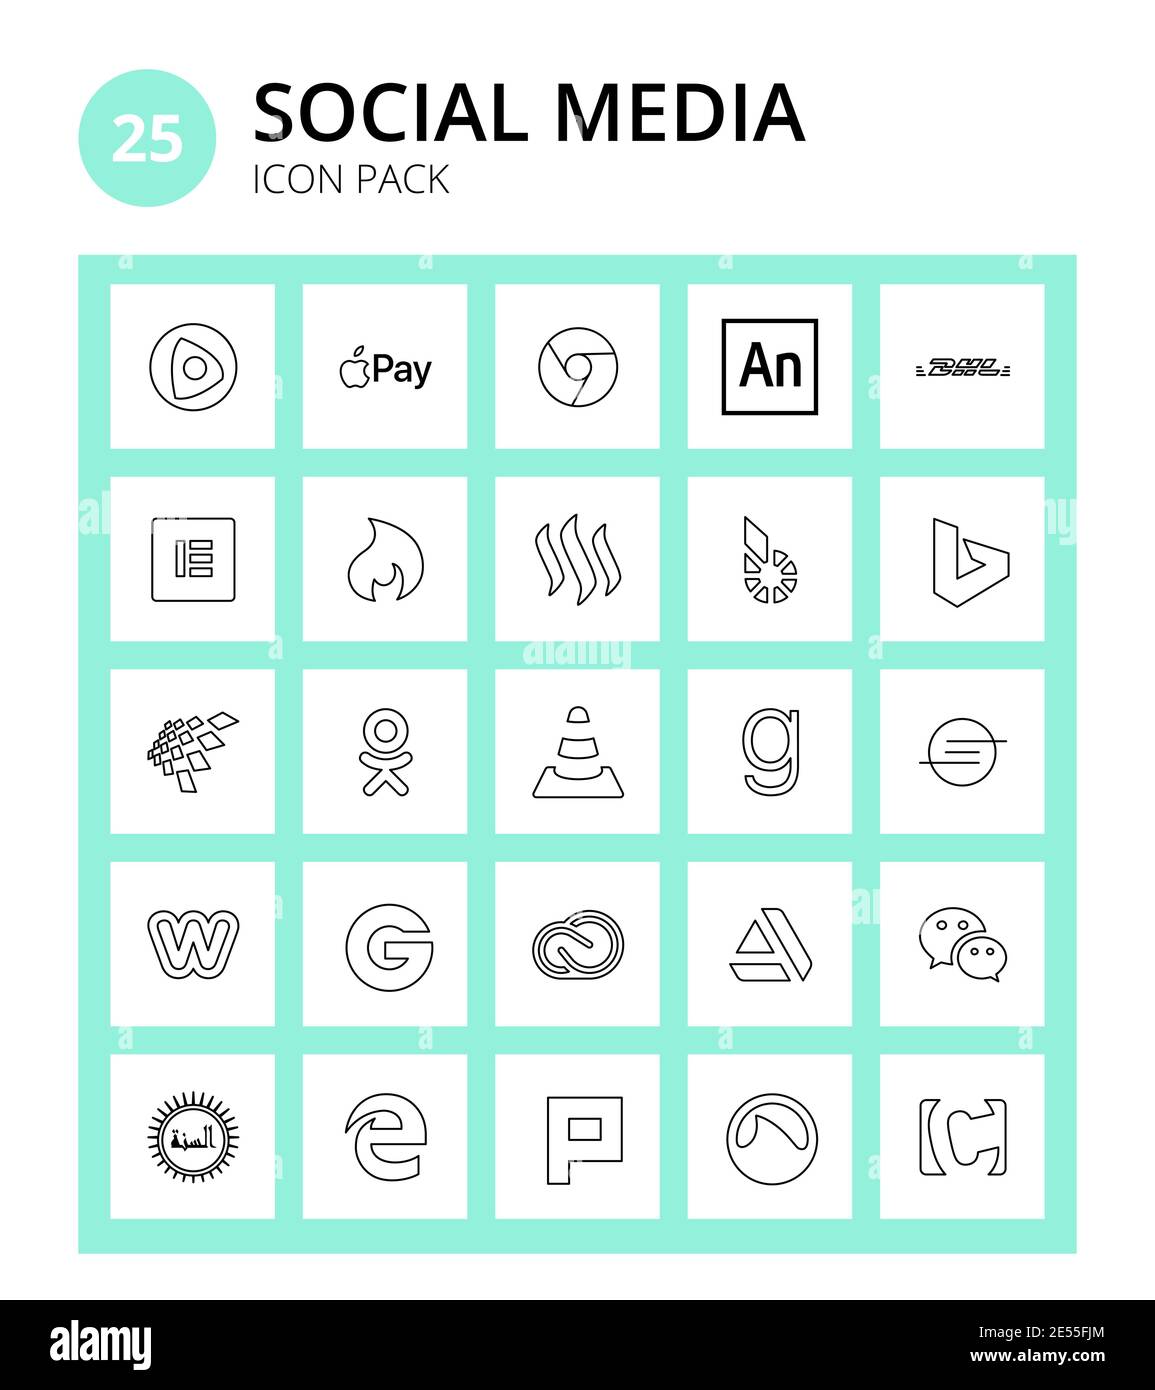 Social Media 25 icons weebly, goodreads, hotjar, vlc, schlix Editable Vector Design Elements Stock Vector